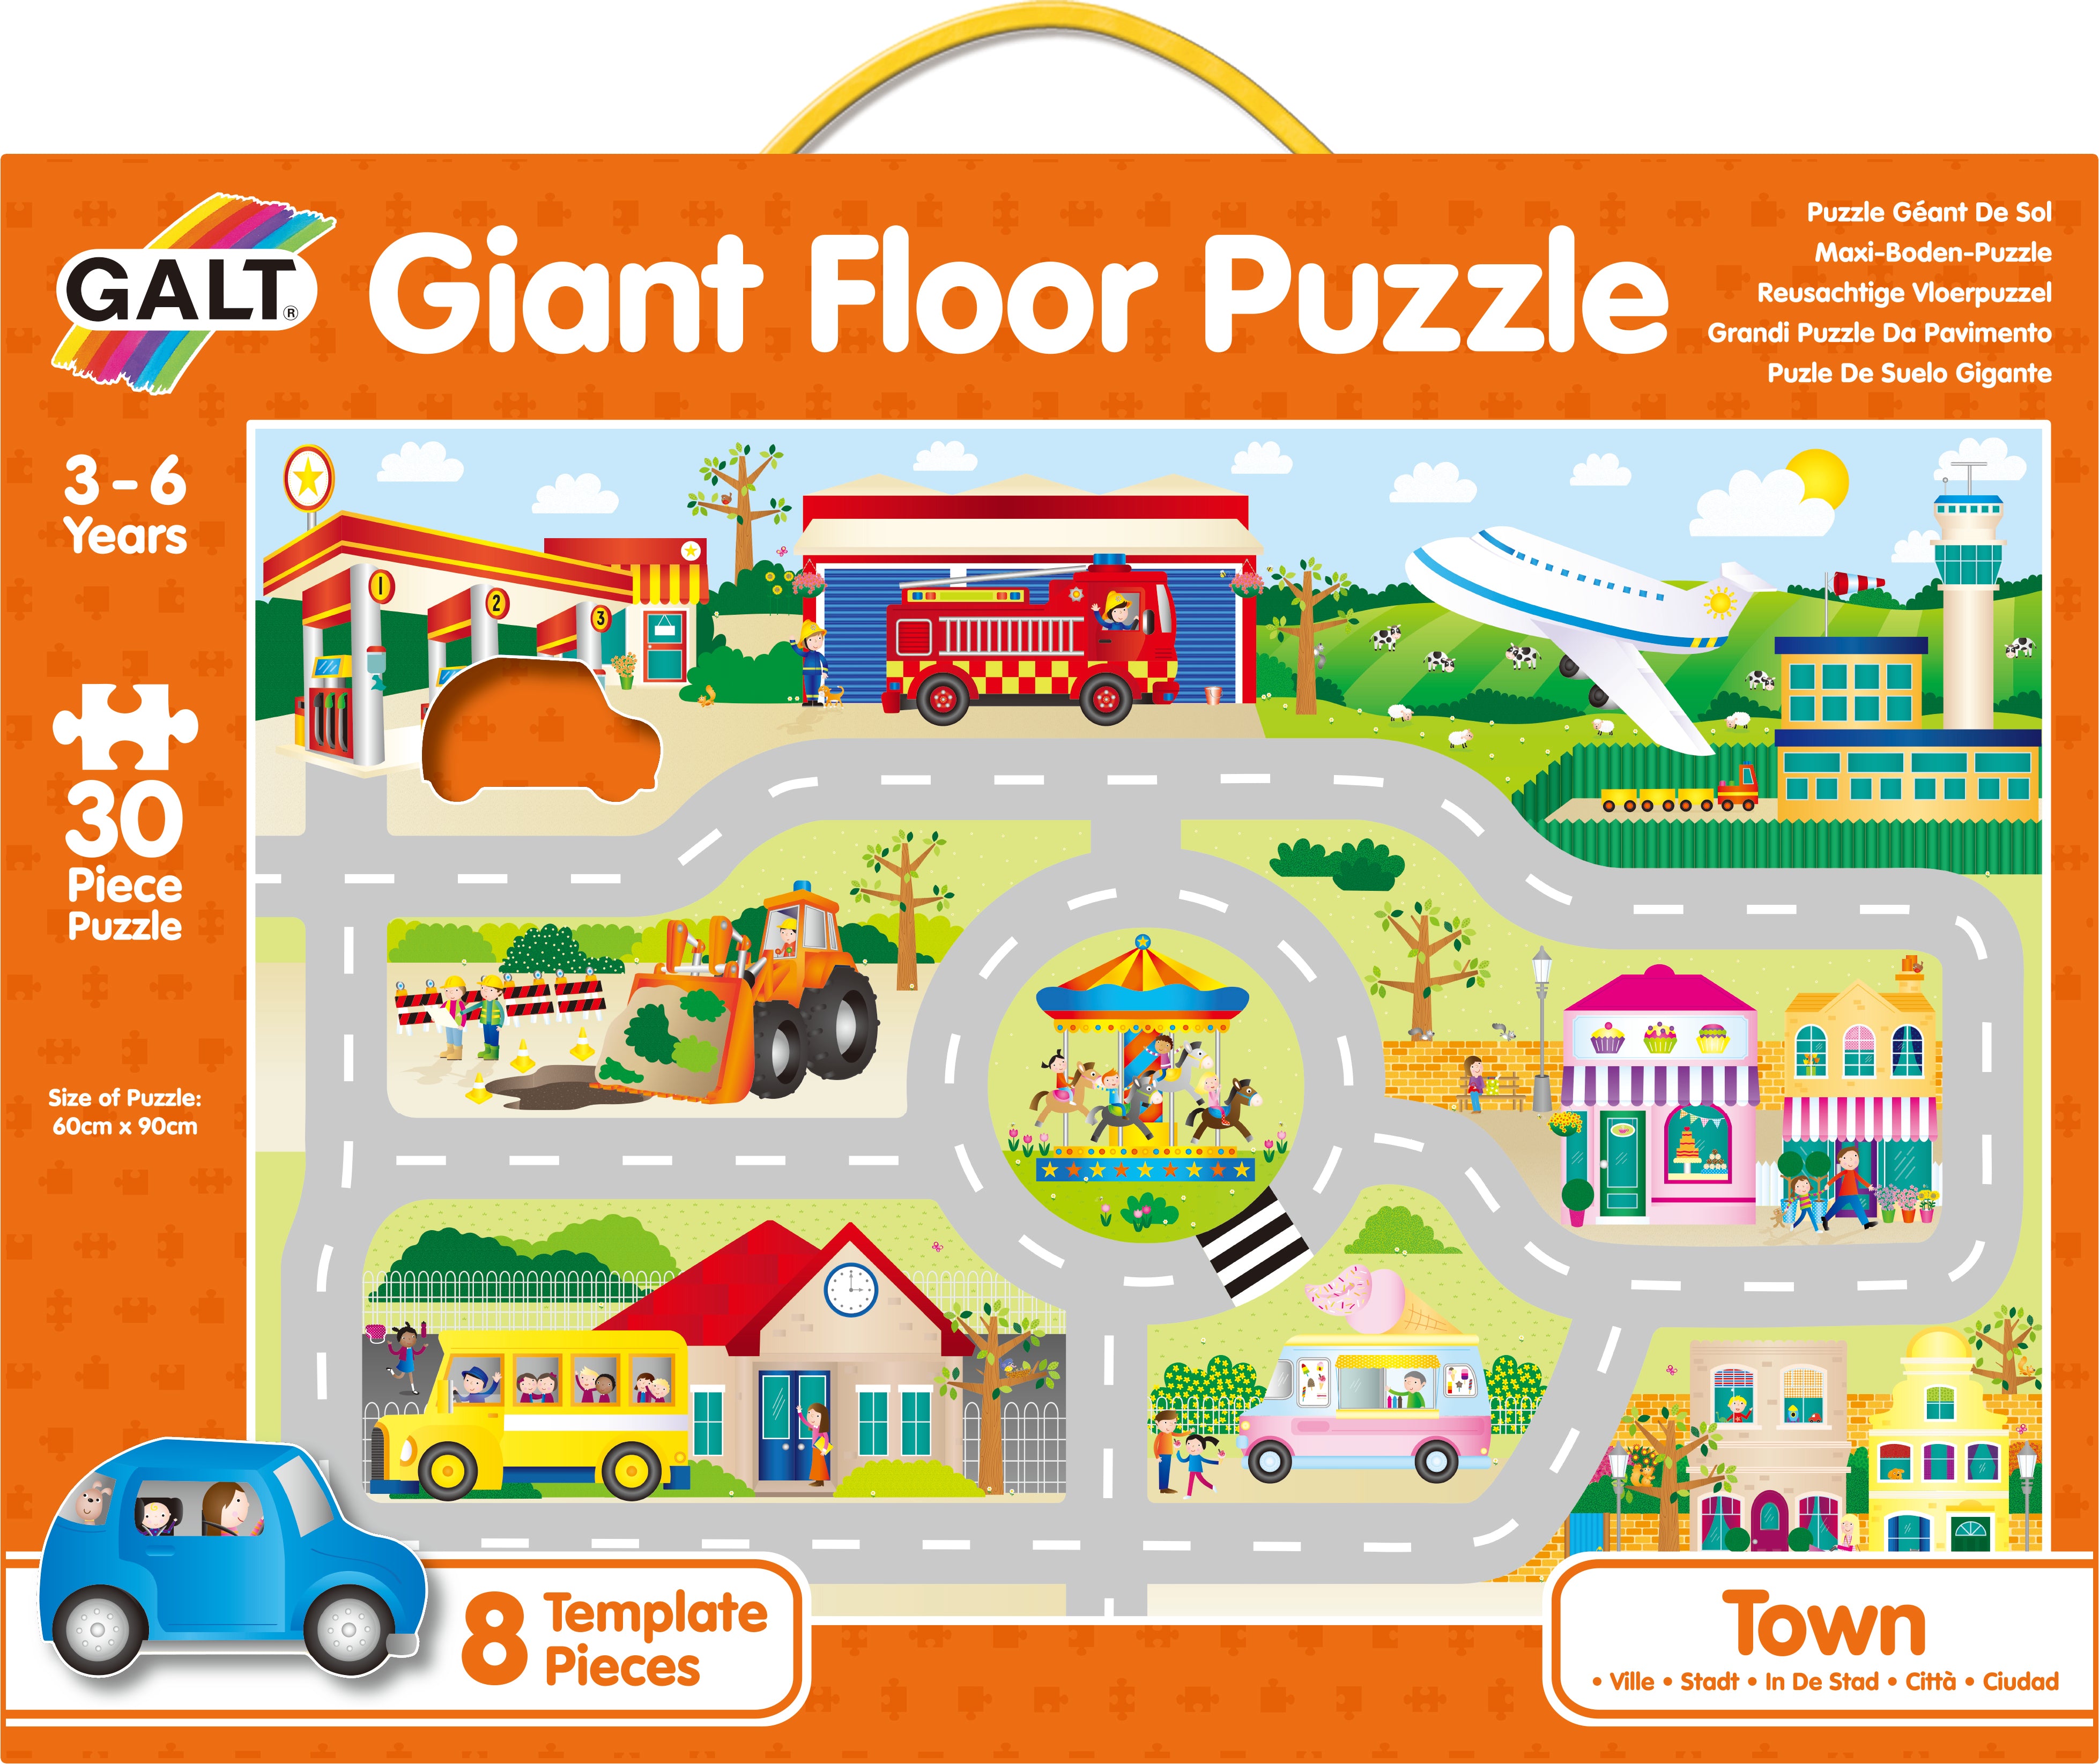 Galt - Giant Floor Puzzle - Town